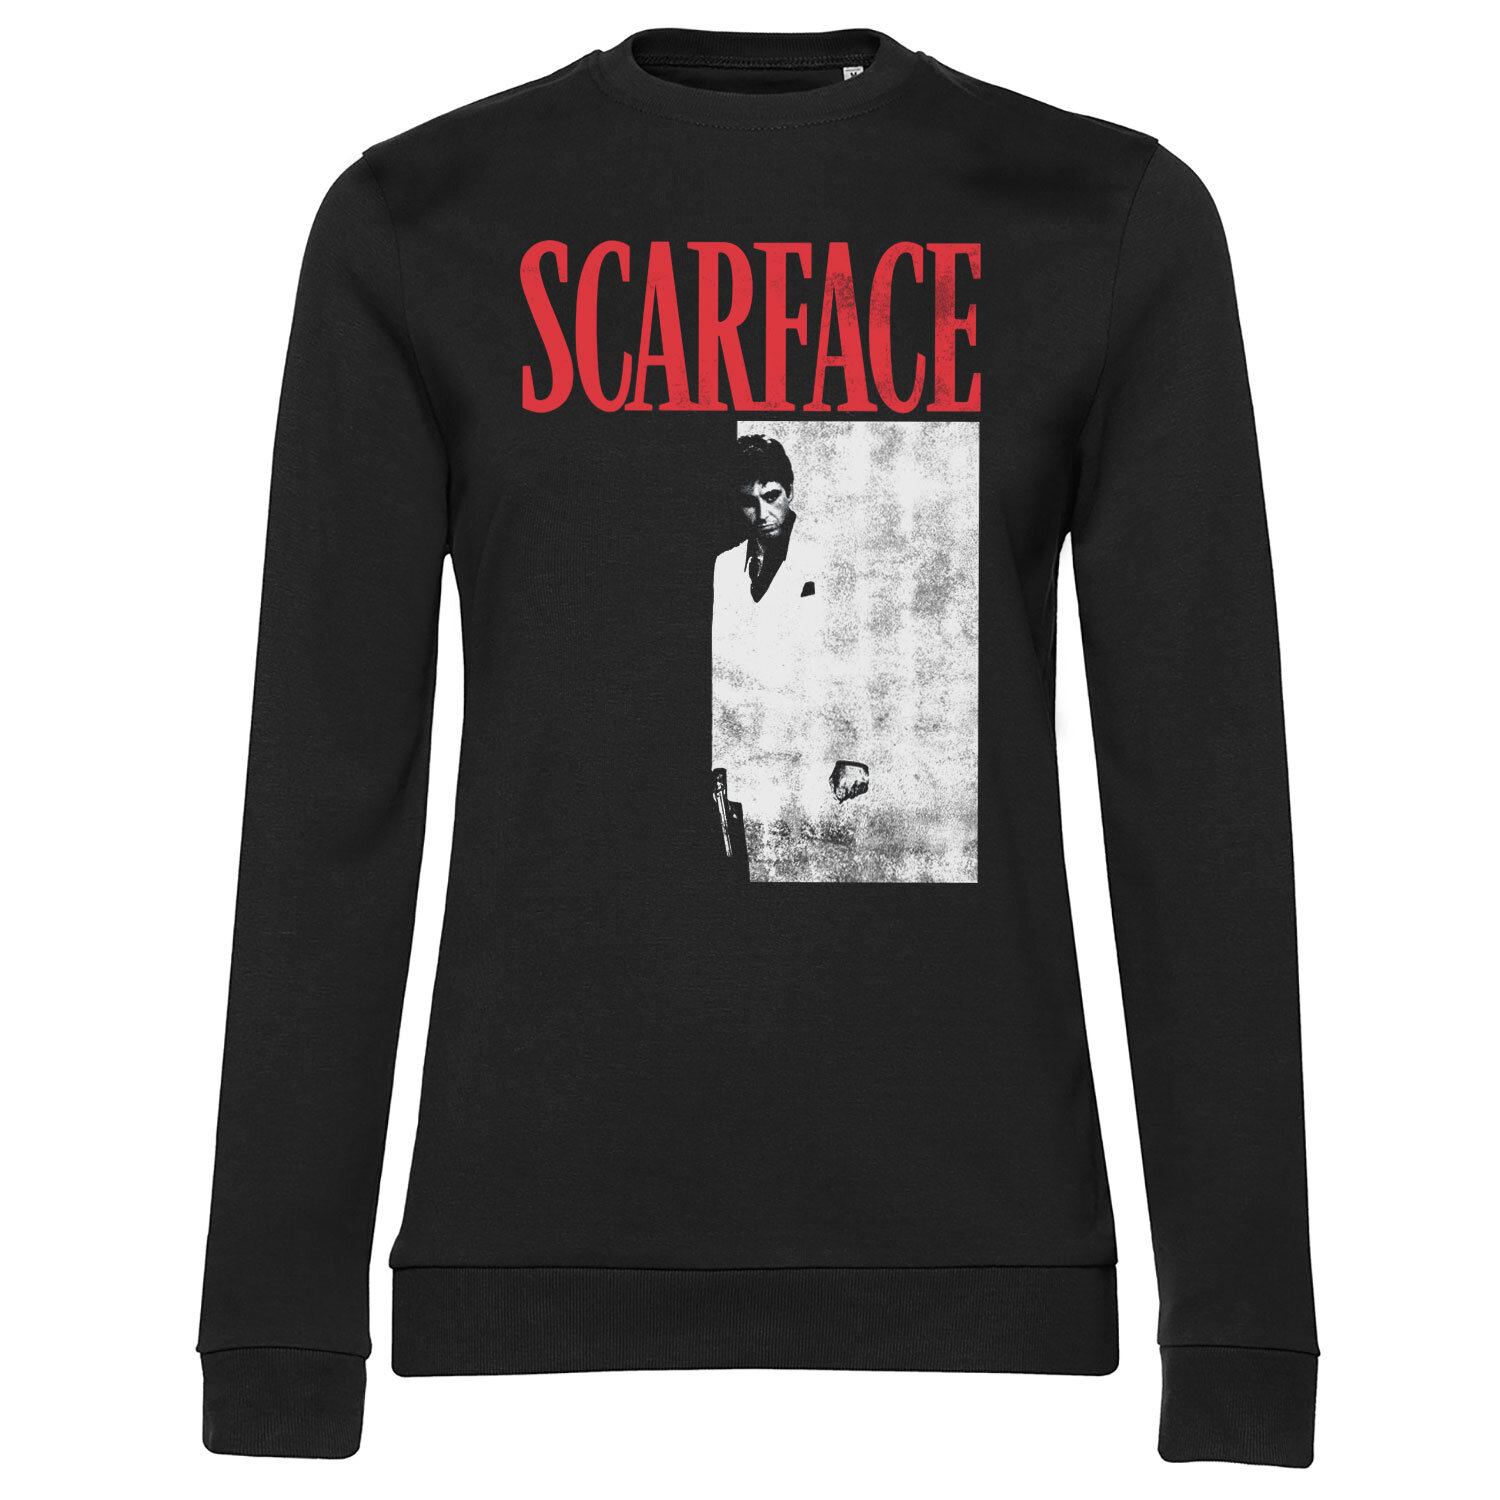 Scarface Poster Girly Sweatshirt